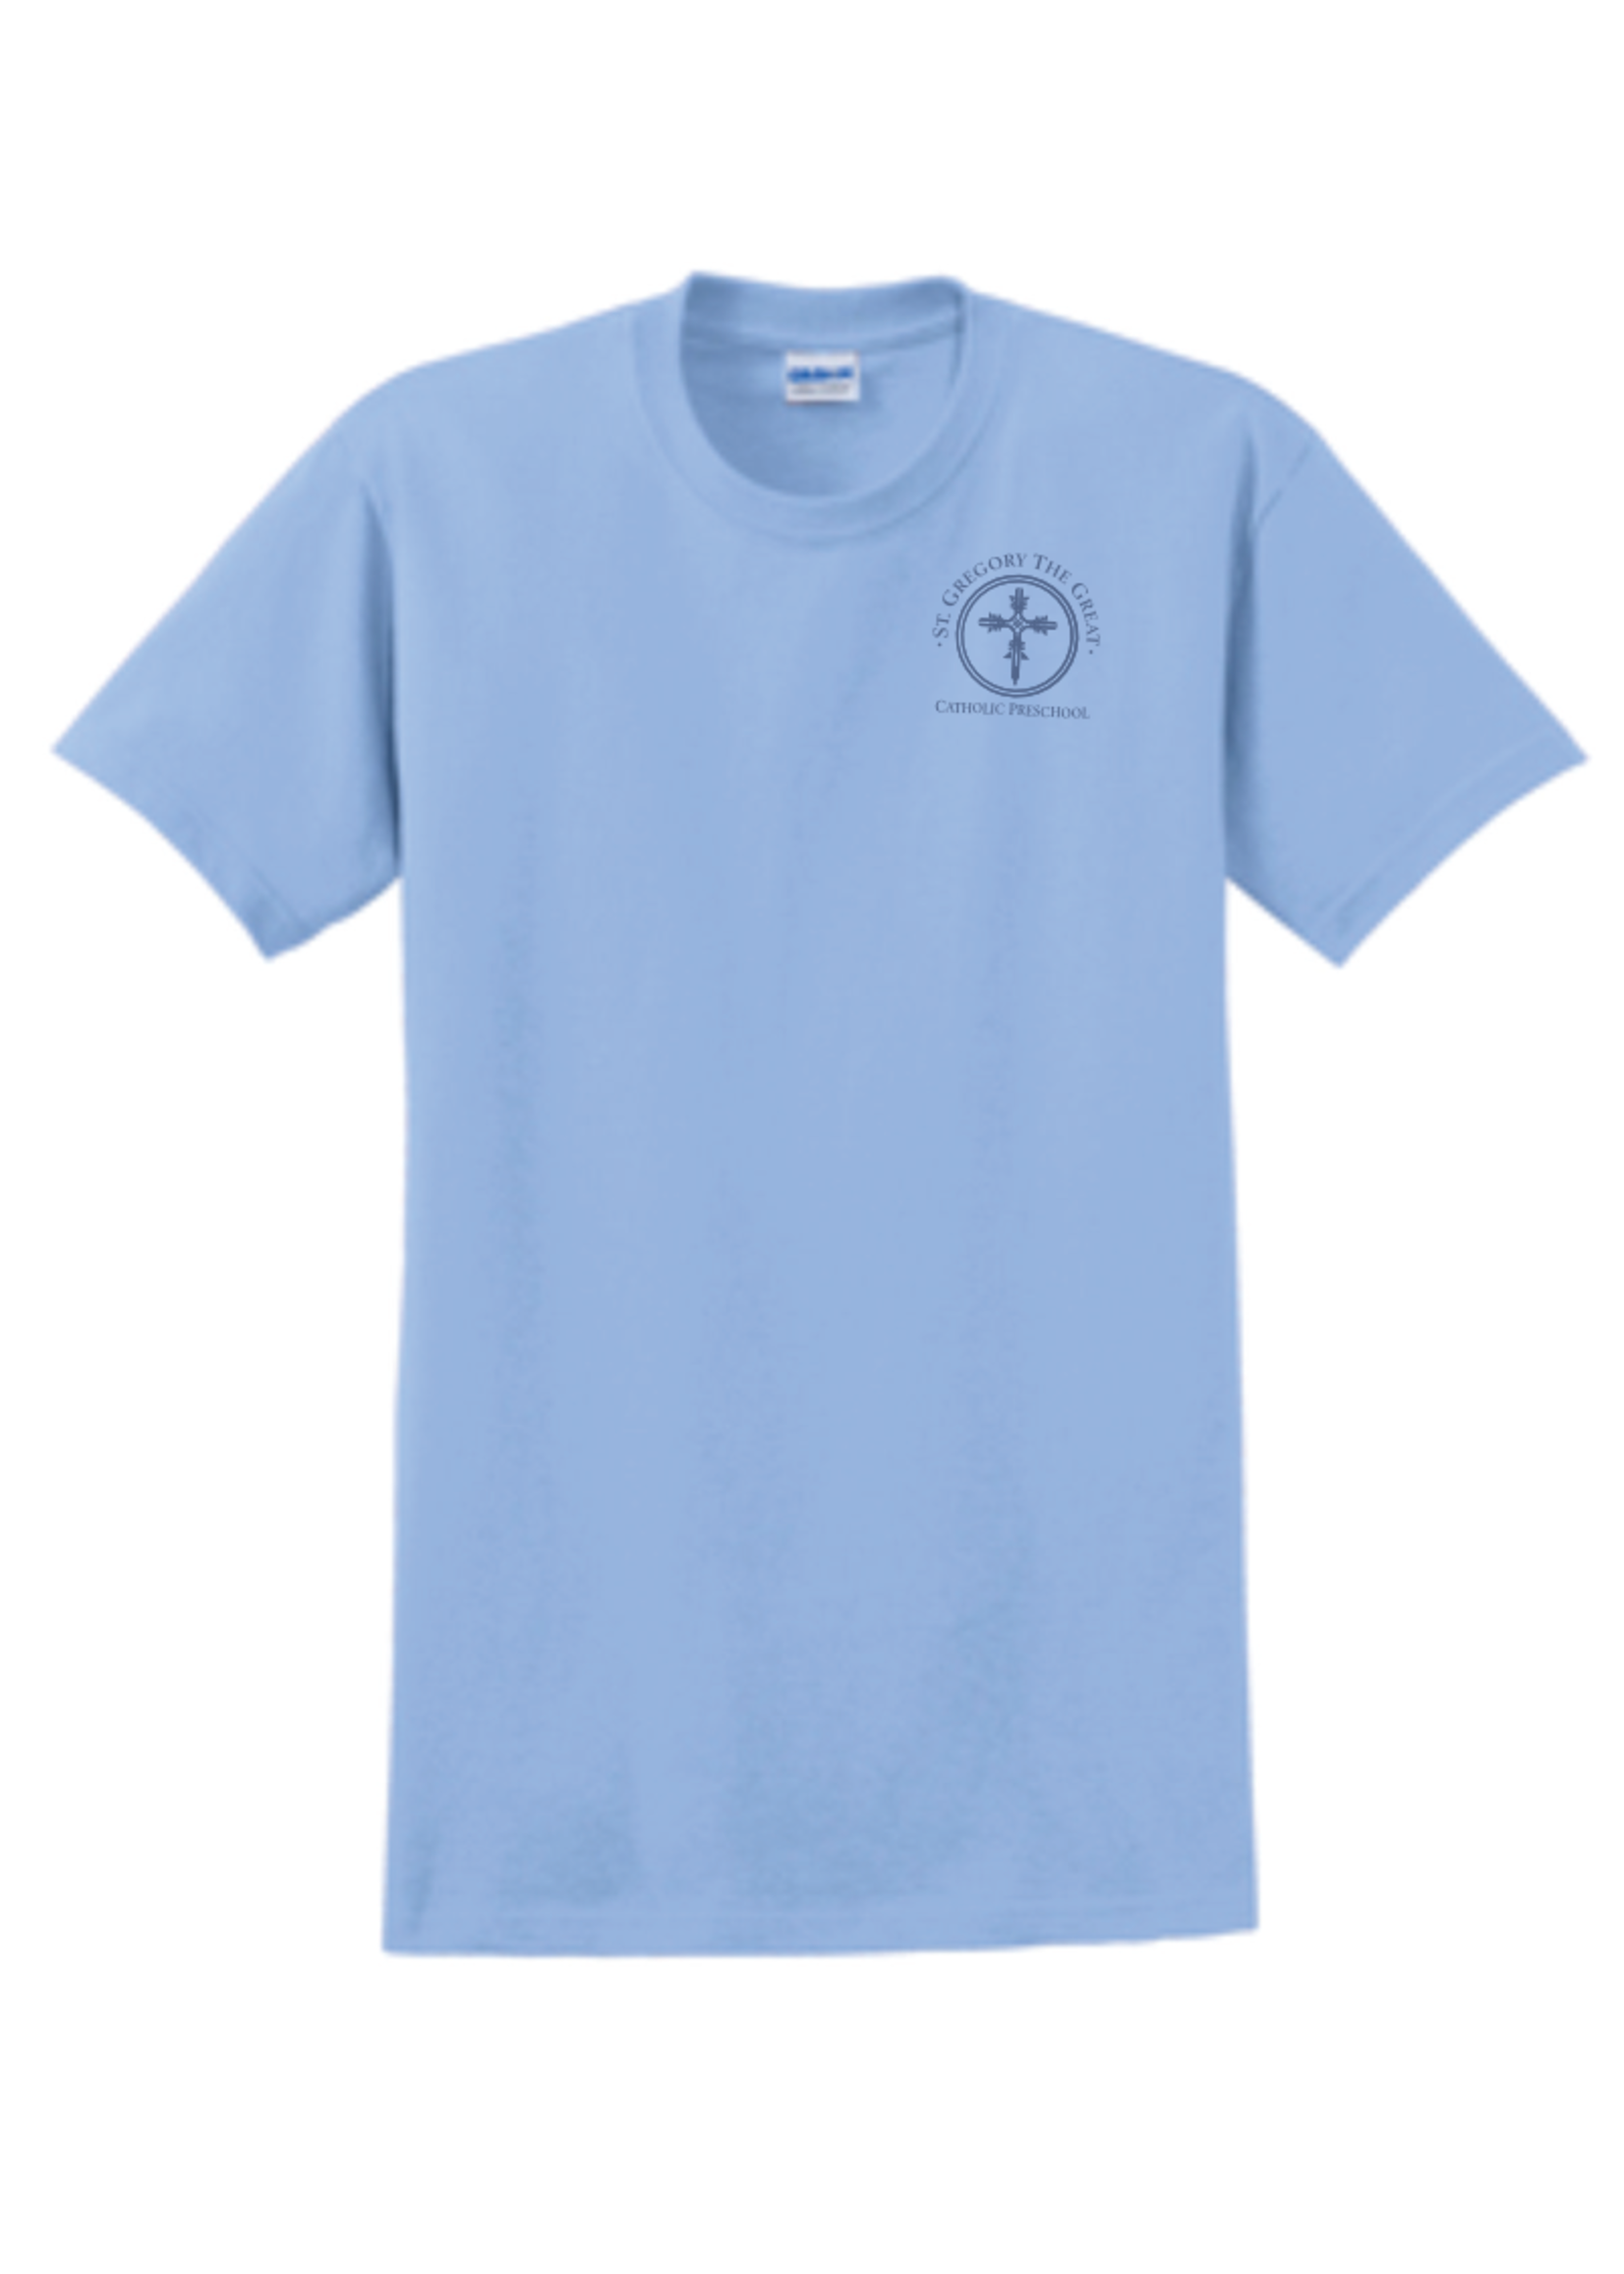 SGGP Short Sleeve Lt. Blue T-Shirt